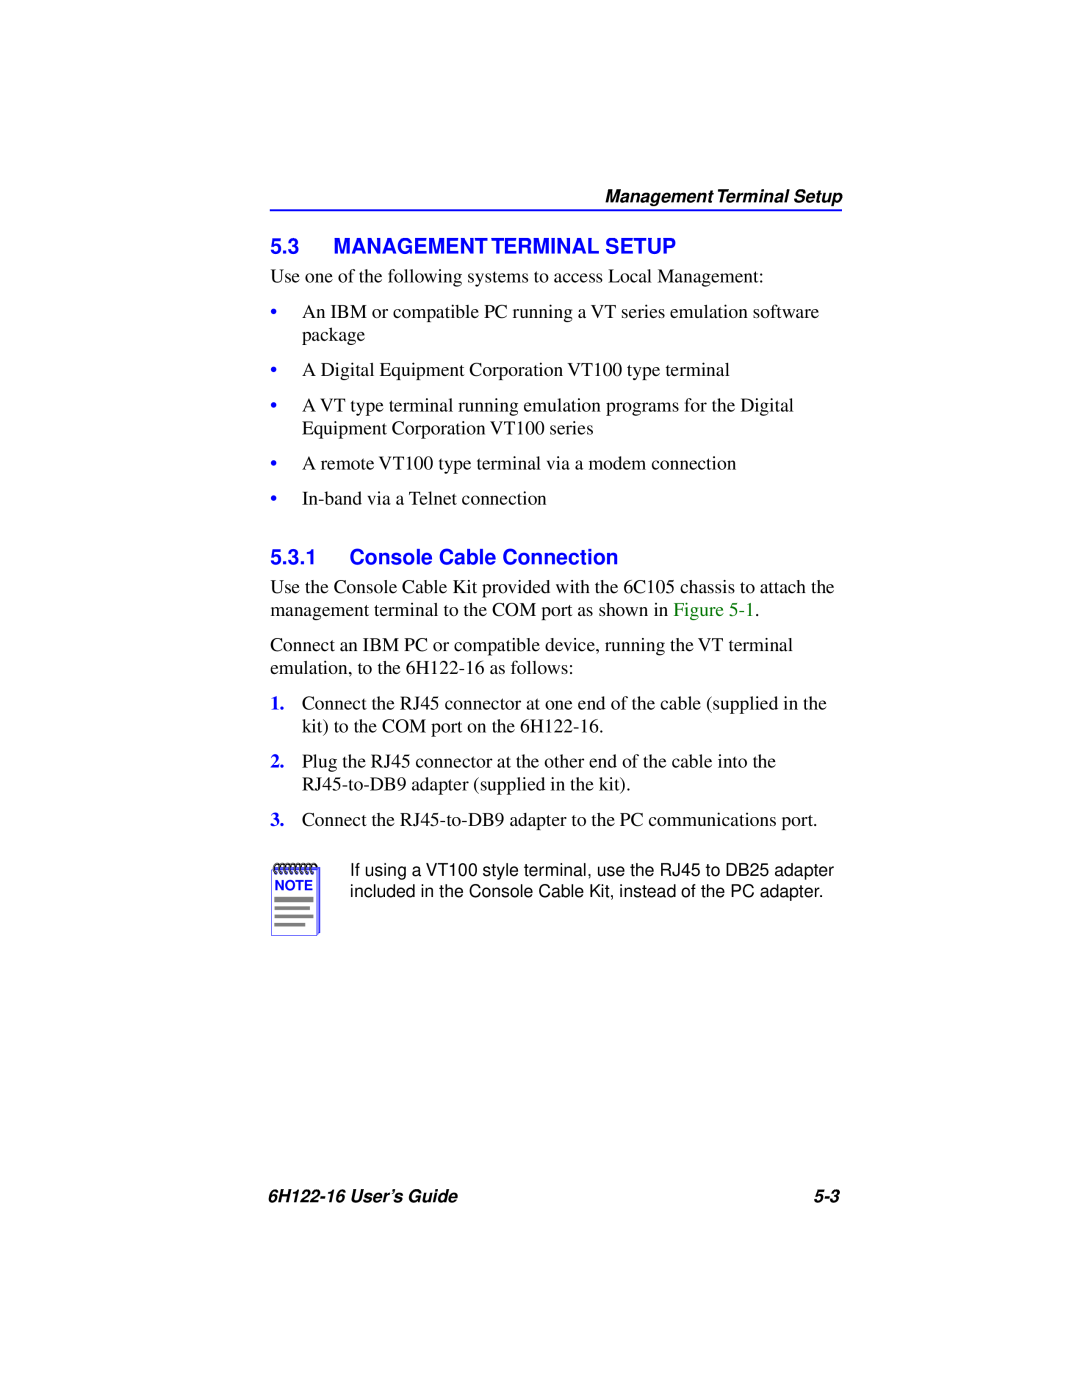 Cabletron Systems 6H122-16 manual Management Terminal Setup, Console Cable Connection 